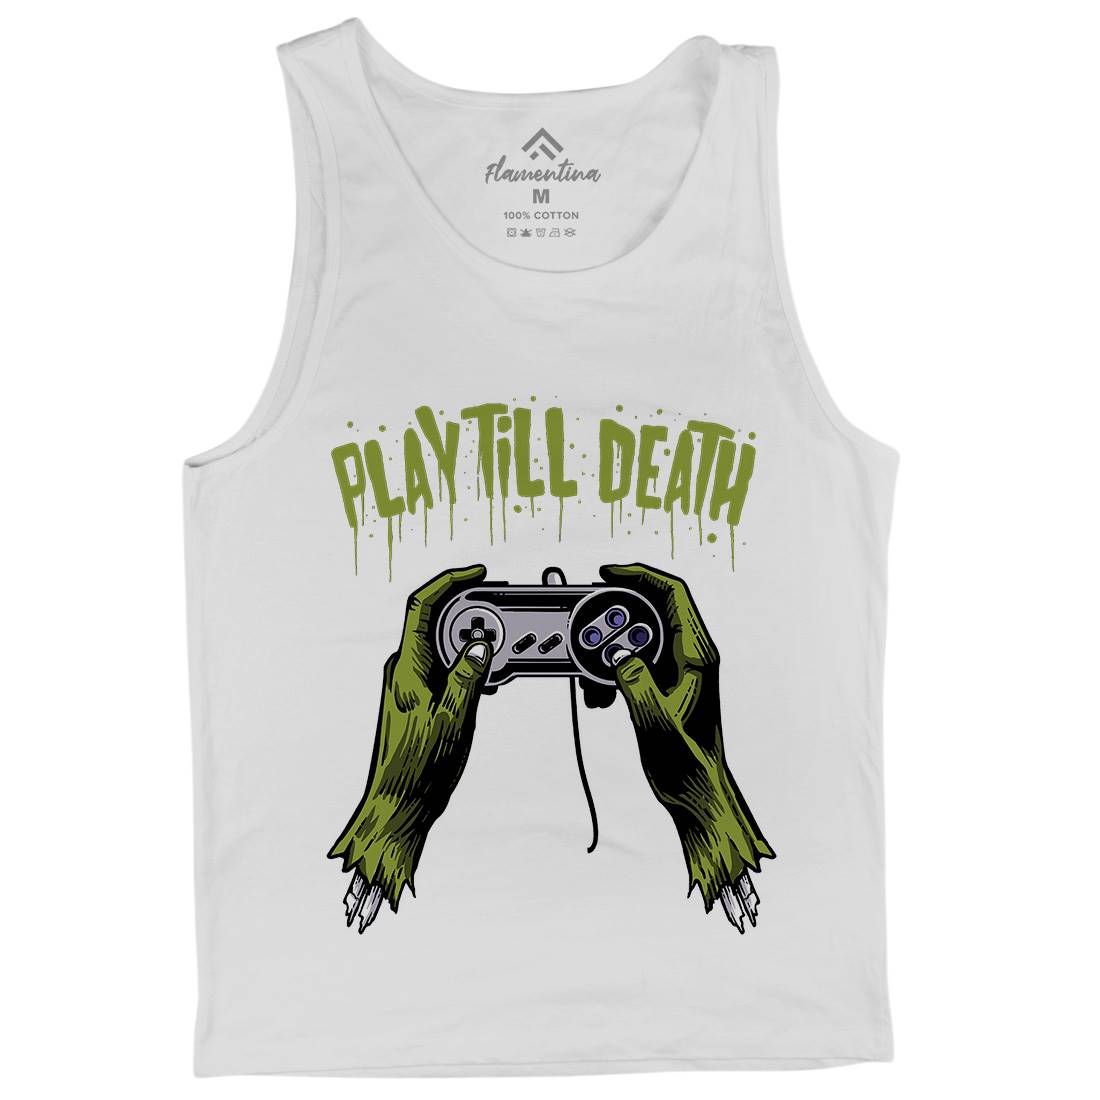 Play Till Death Mens Tank Top Vest Geek A561